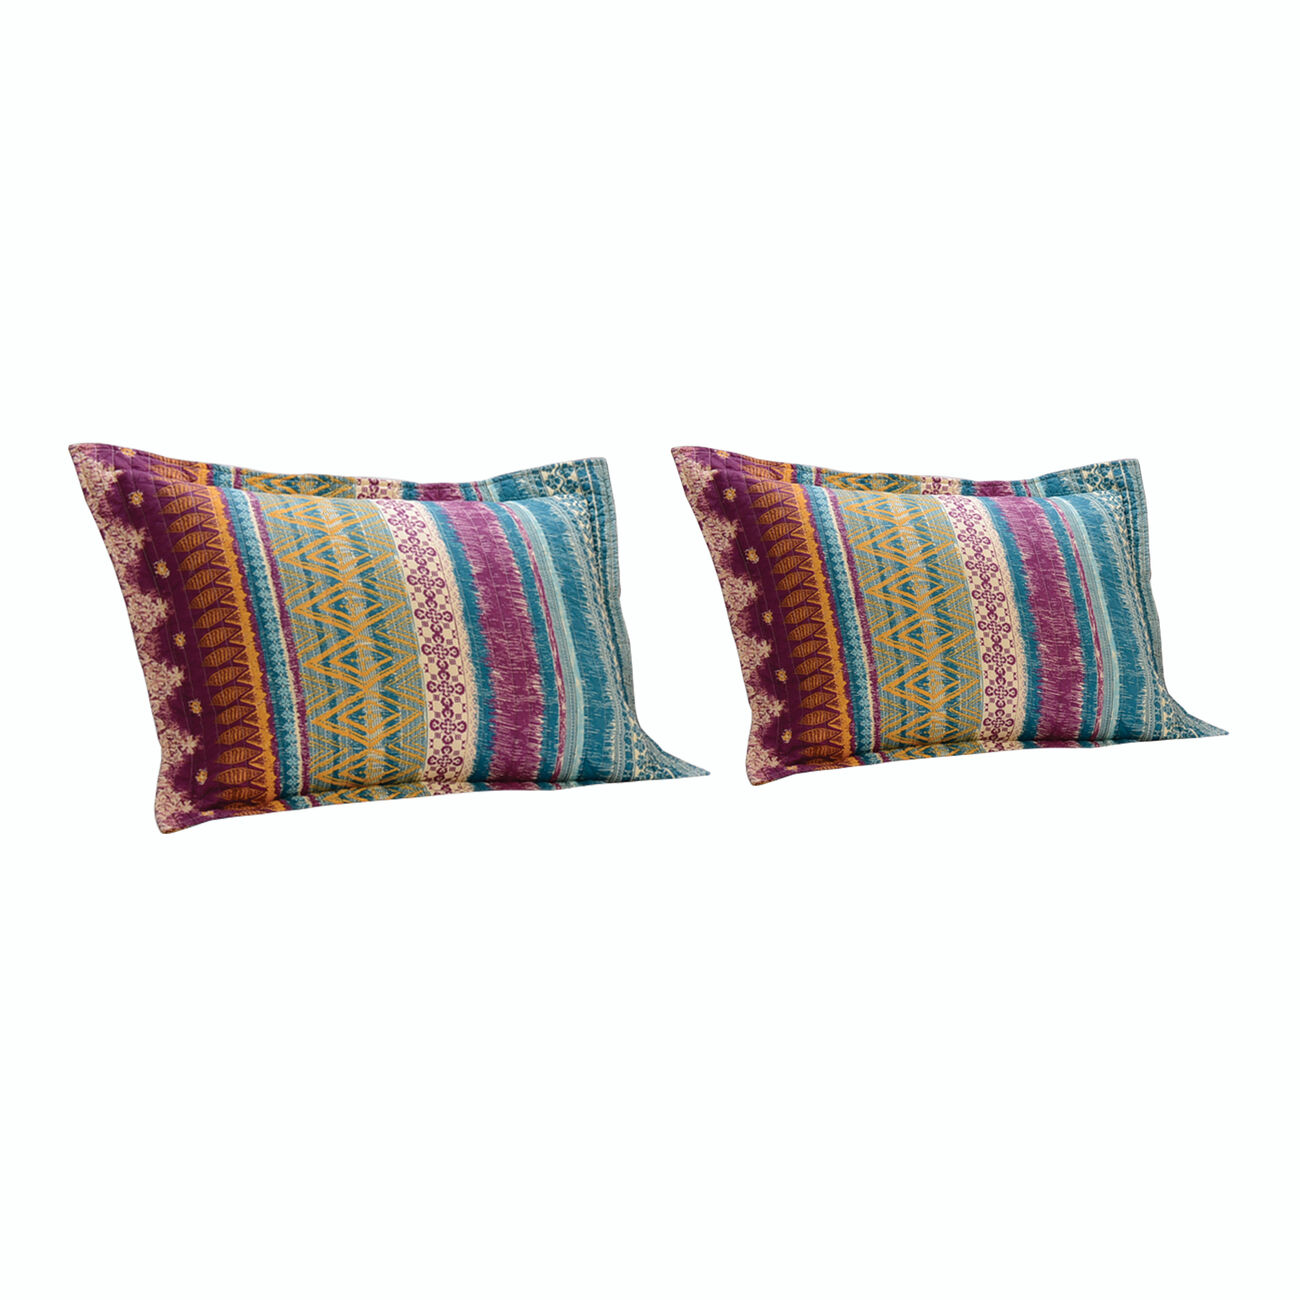 Tribal Motif Print Cotton King Quilt Set with 2 Pillow Sham, Multicolor